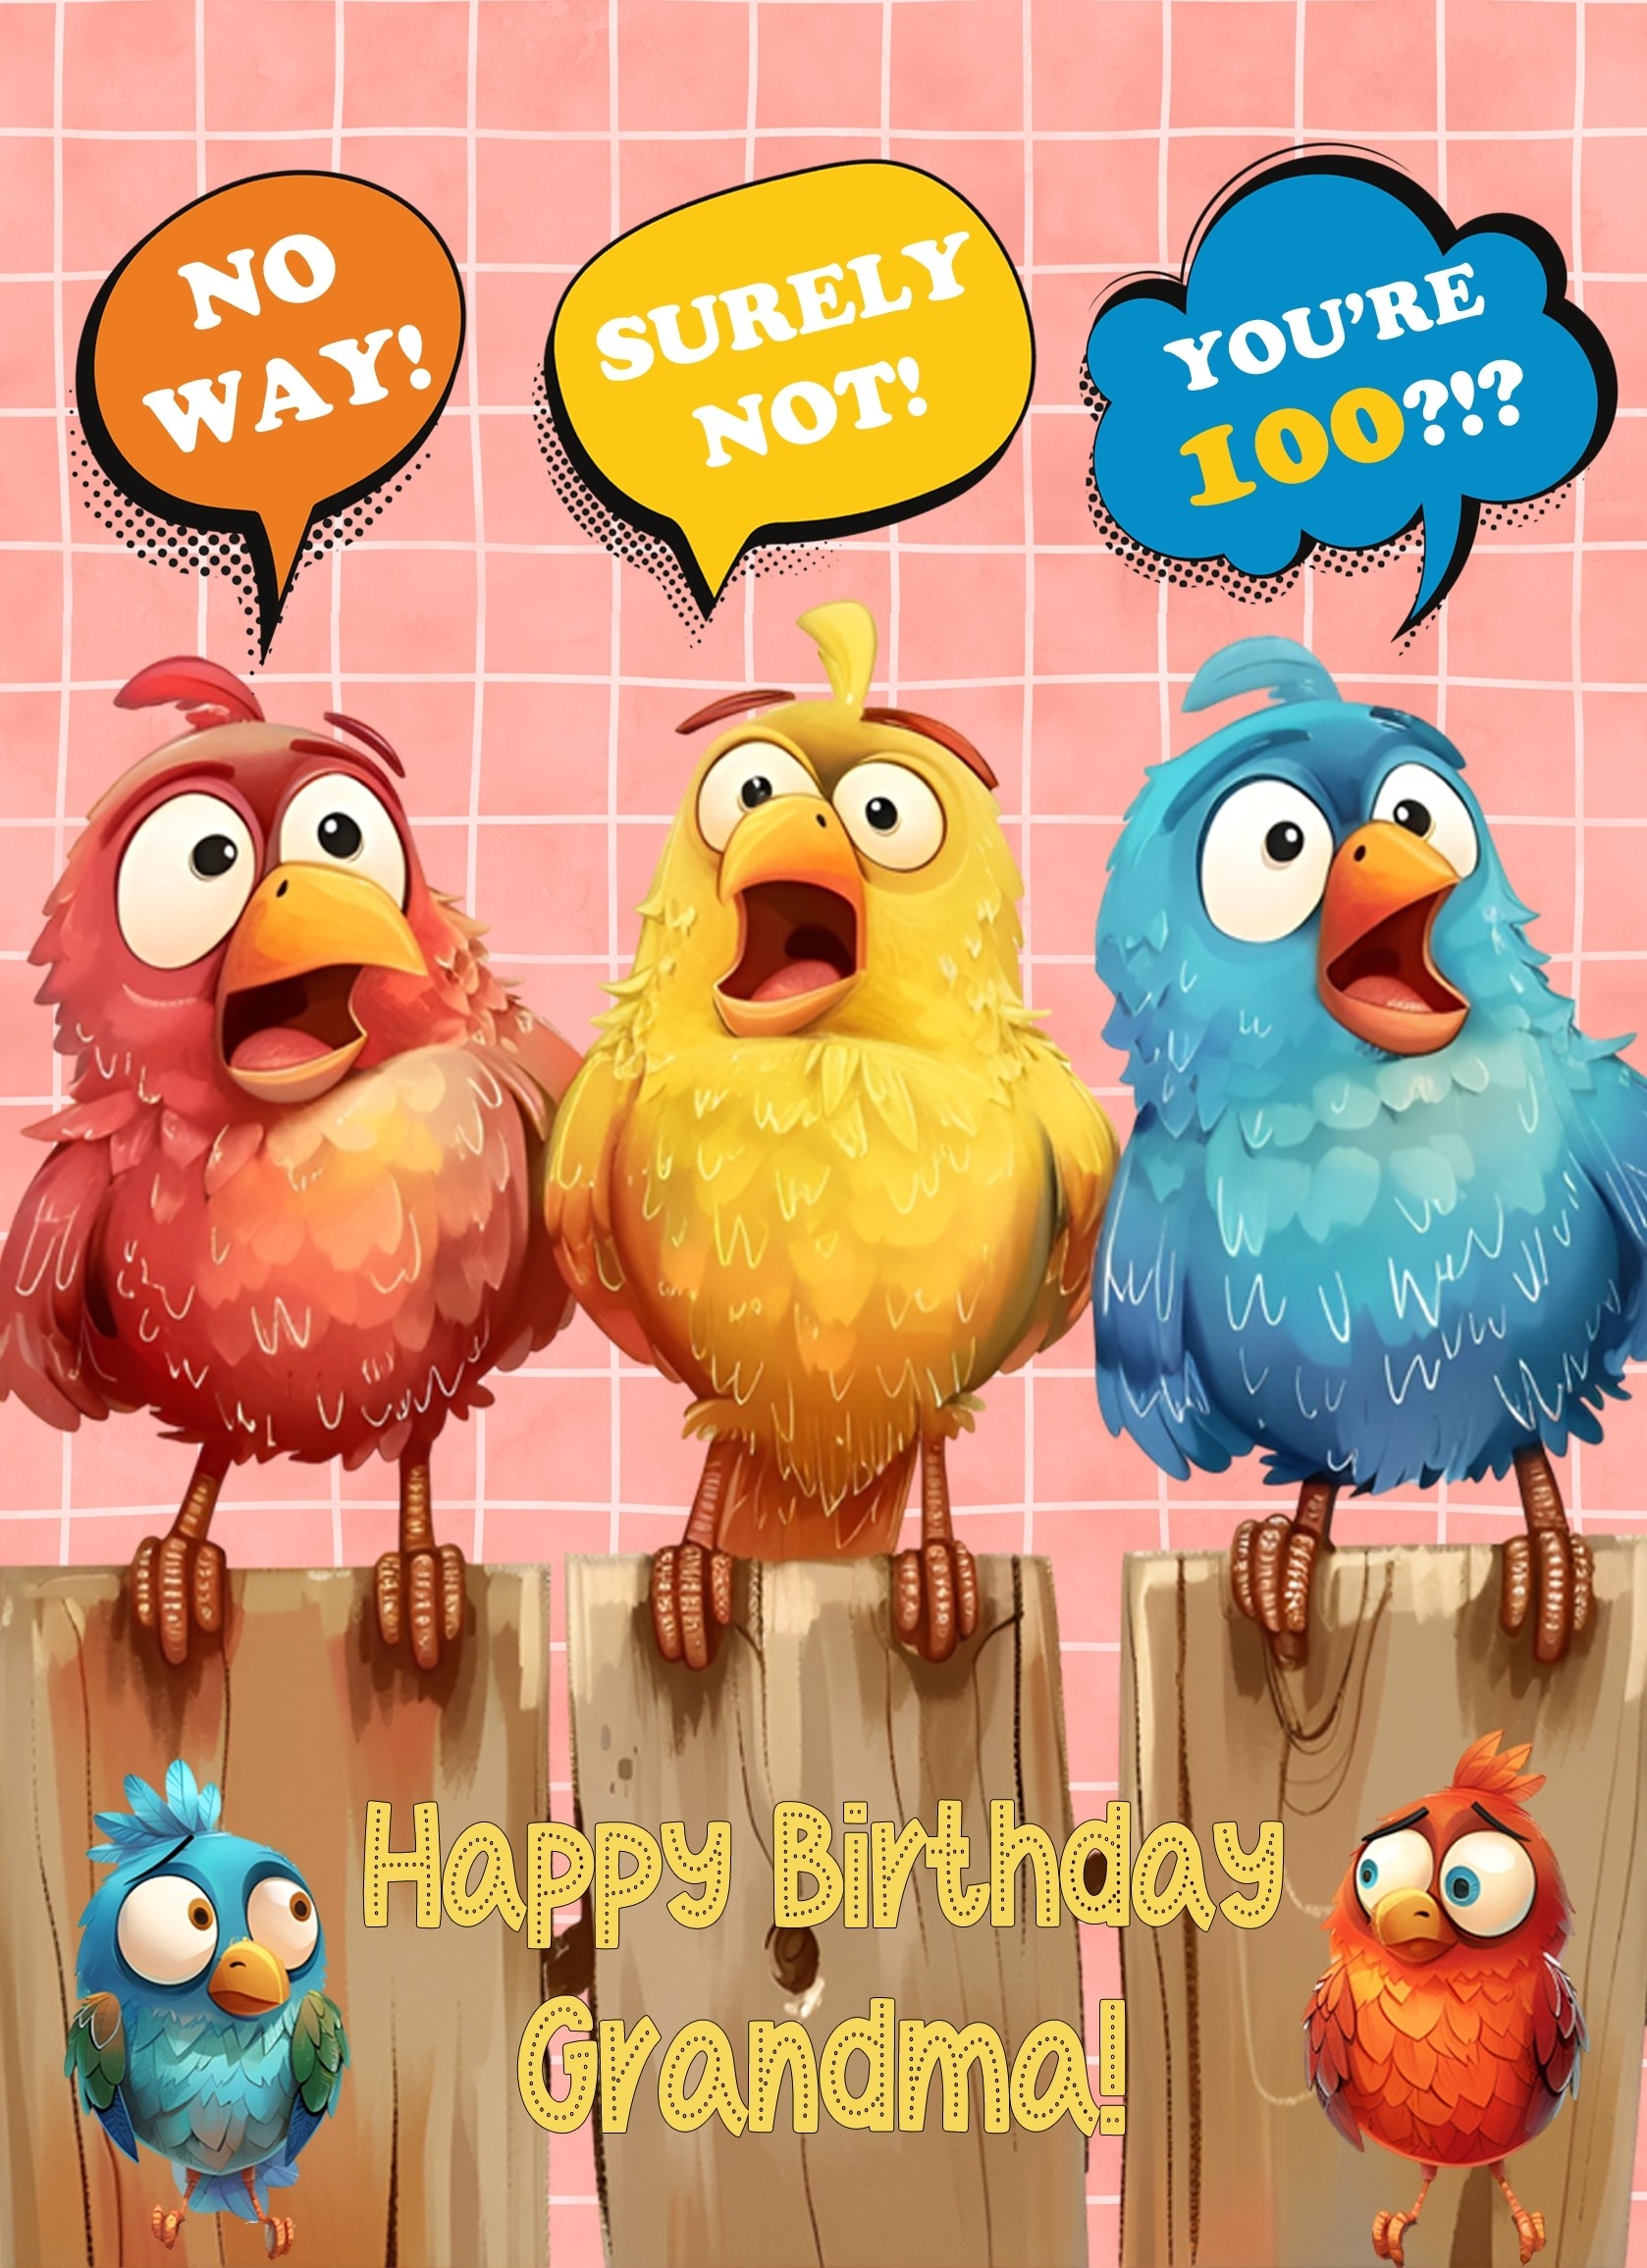 Grandma 100th Birthday Card (Funny Birds Surprised)